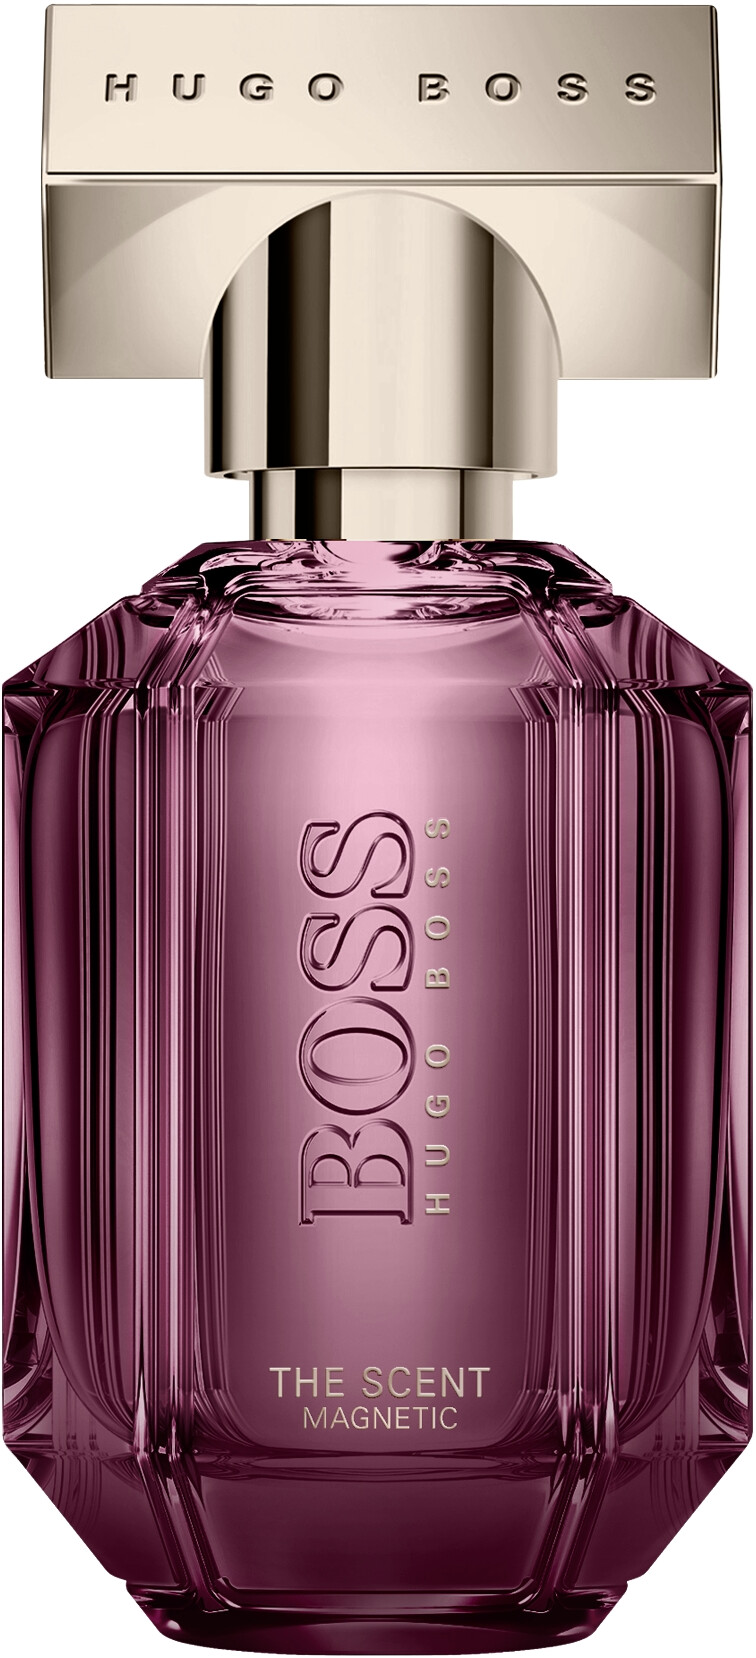 HUGO BOSS BOSS The Scent For Her Magnetic Eau de Parfum Spray 30ml